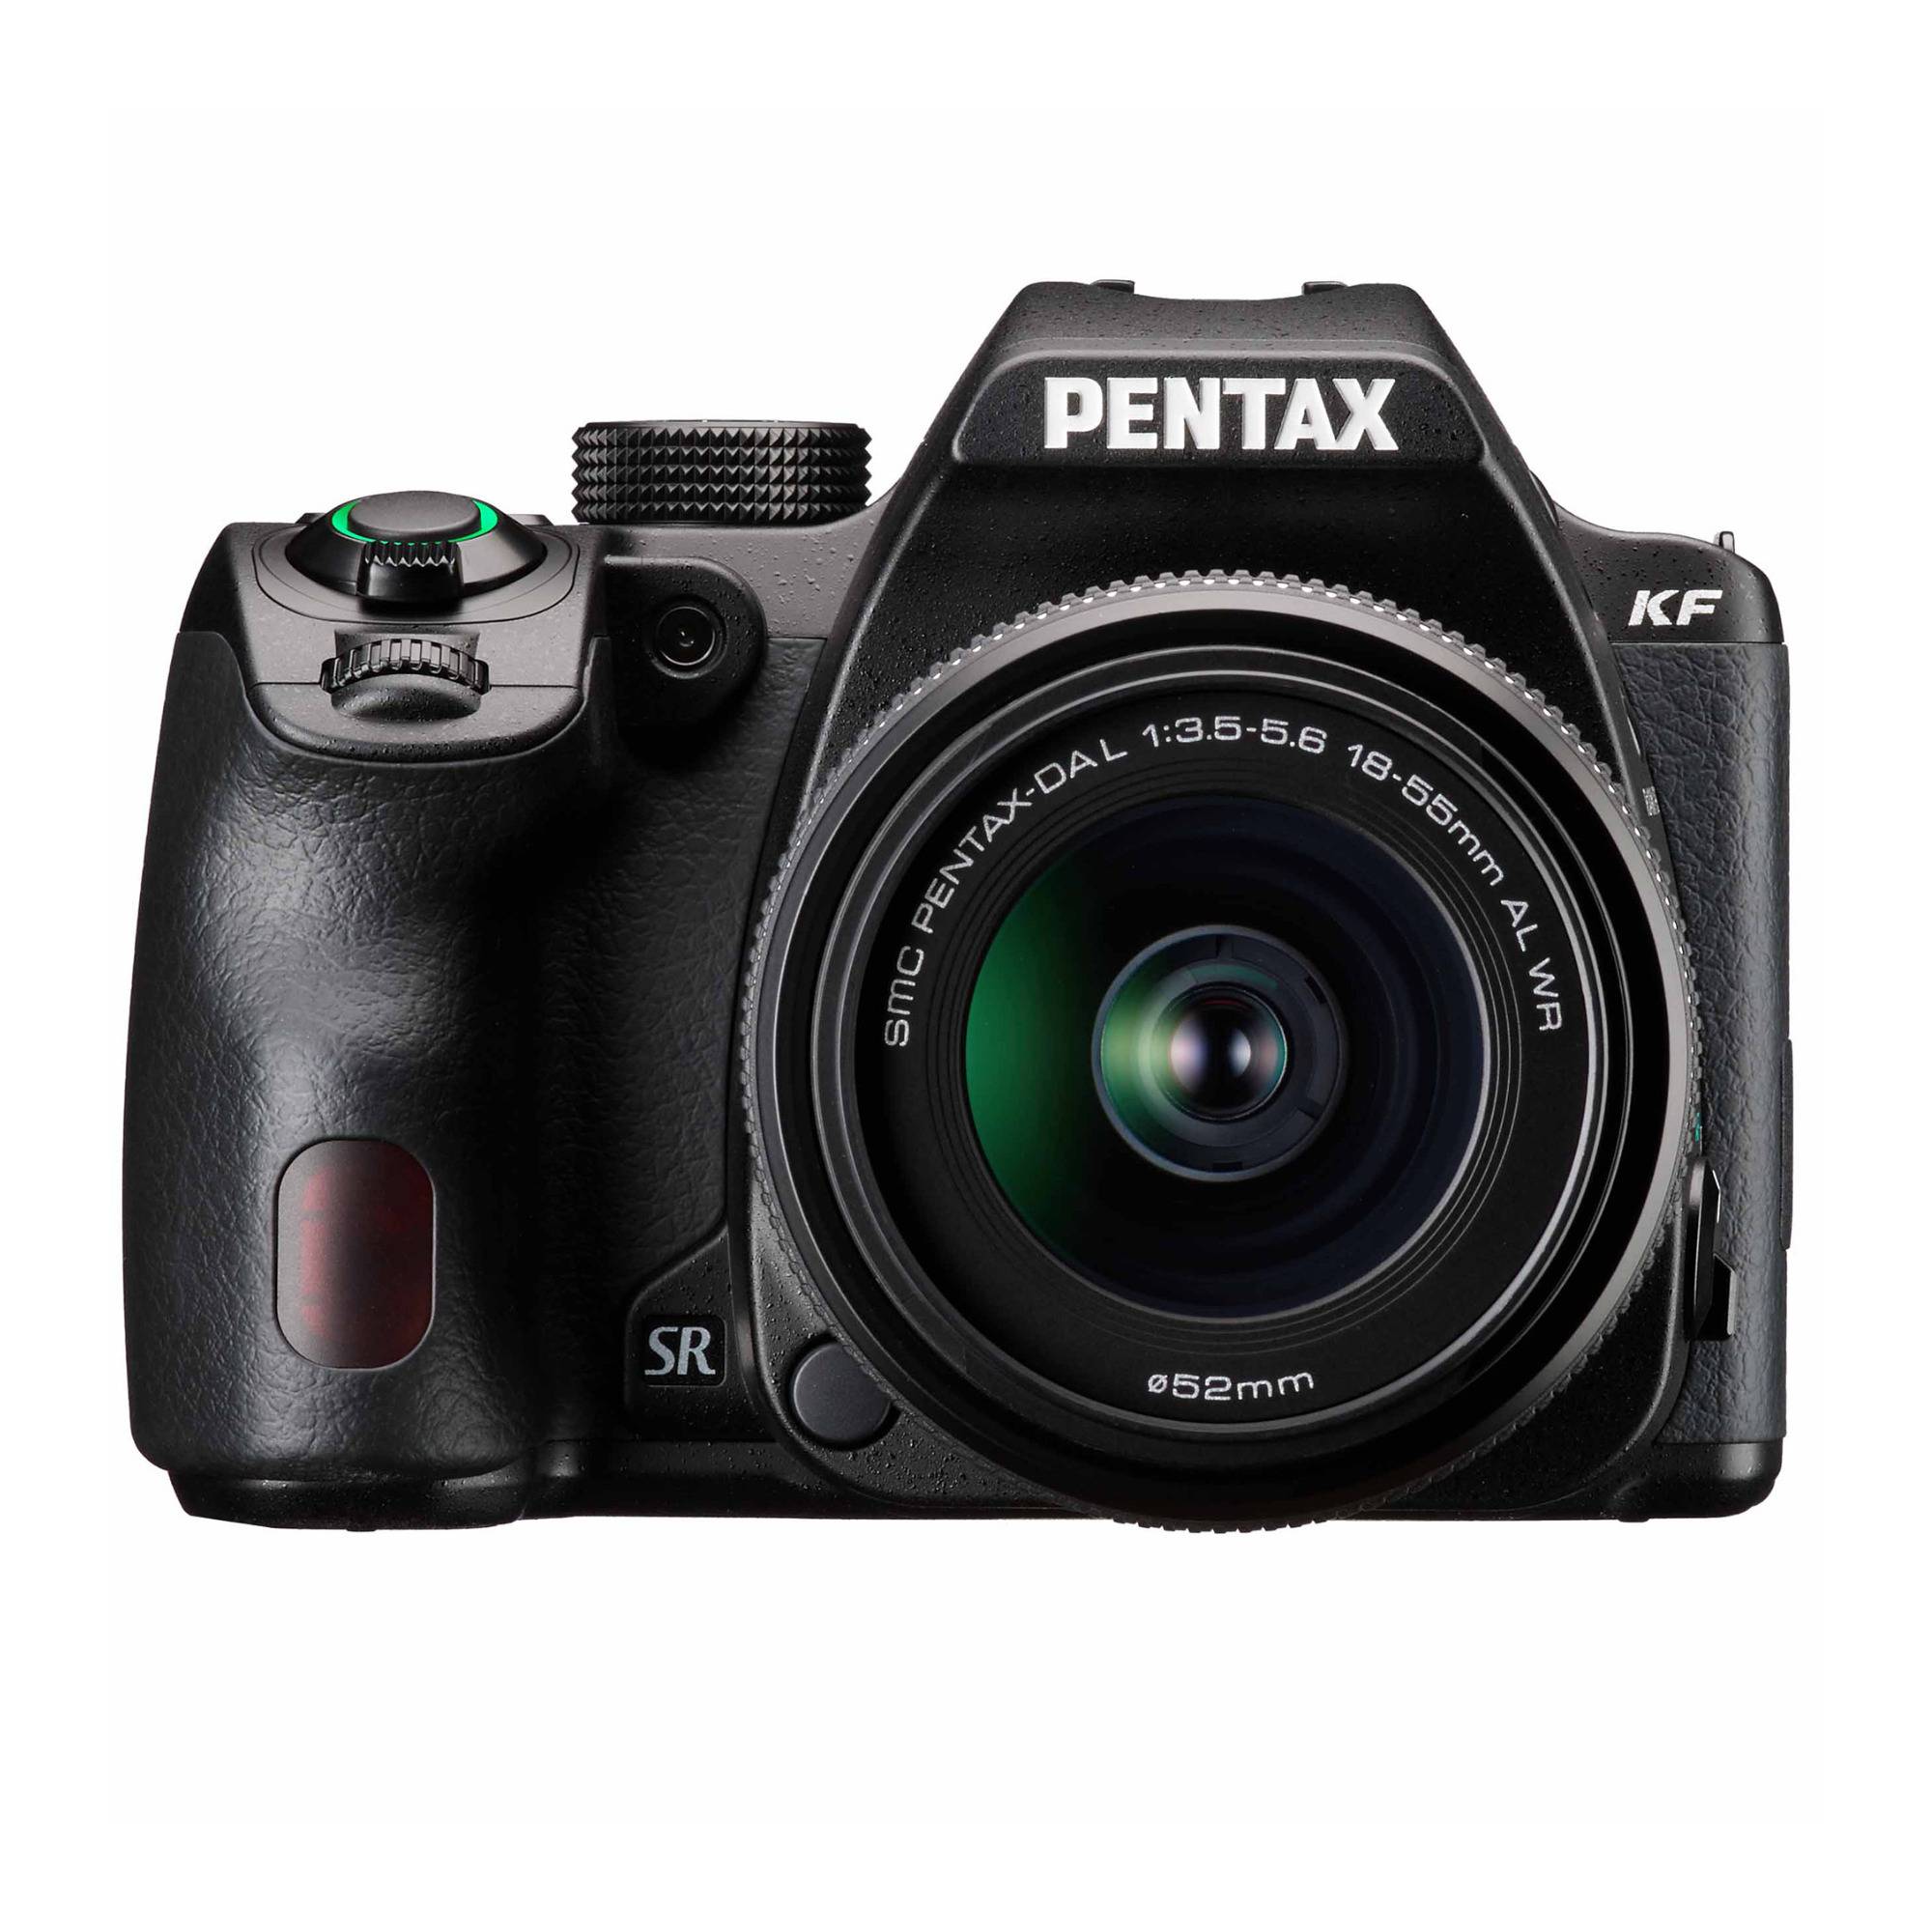 Pentax KF DSLR Camera Kit (Black) with PENTAX DA L 18-55mm F3.5-5.6 AL WR Lens